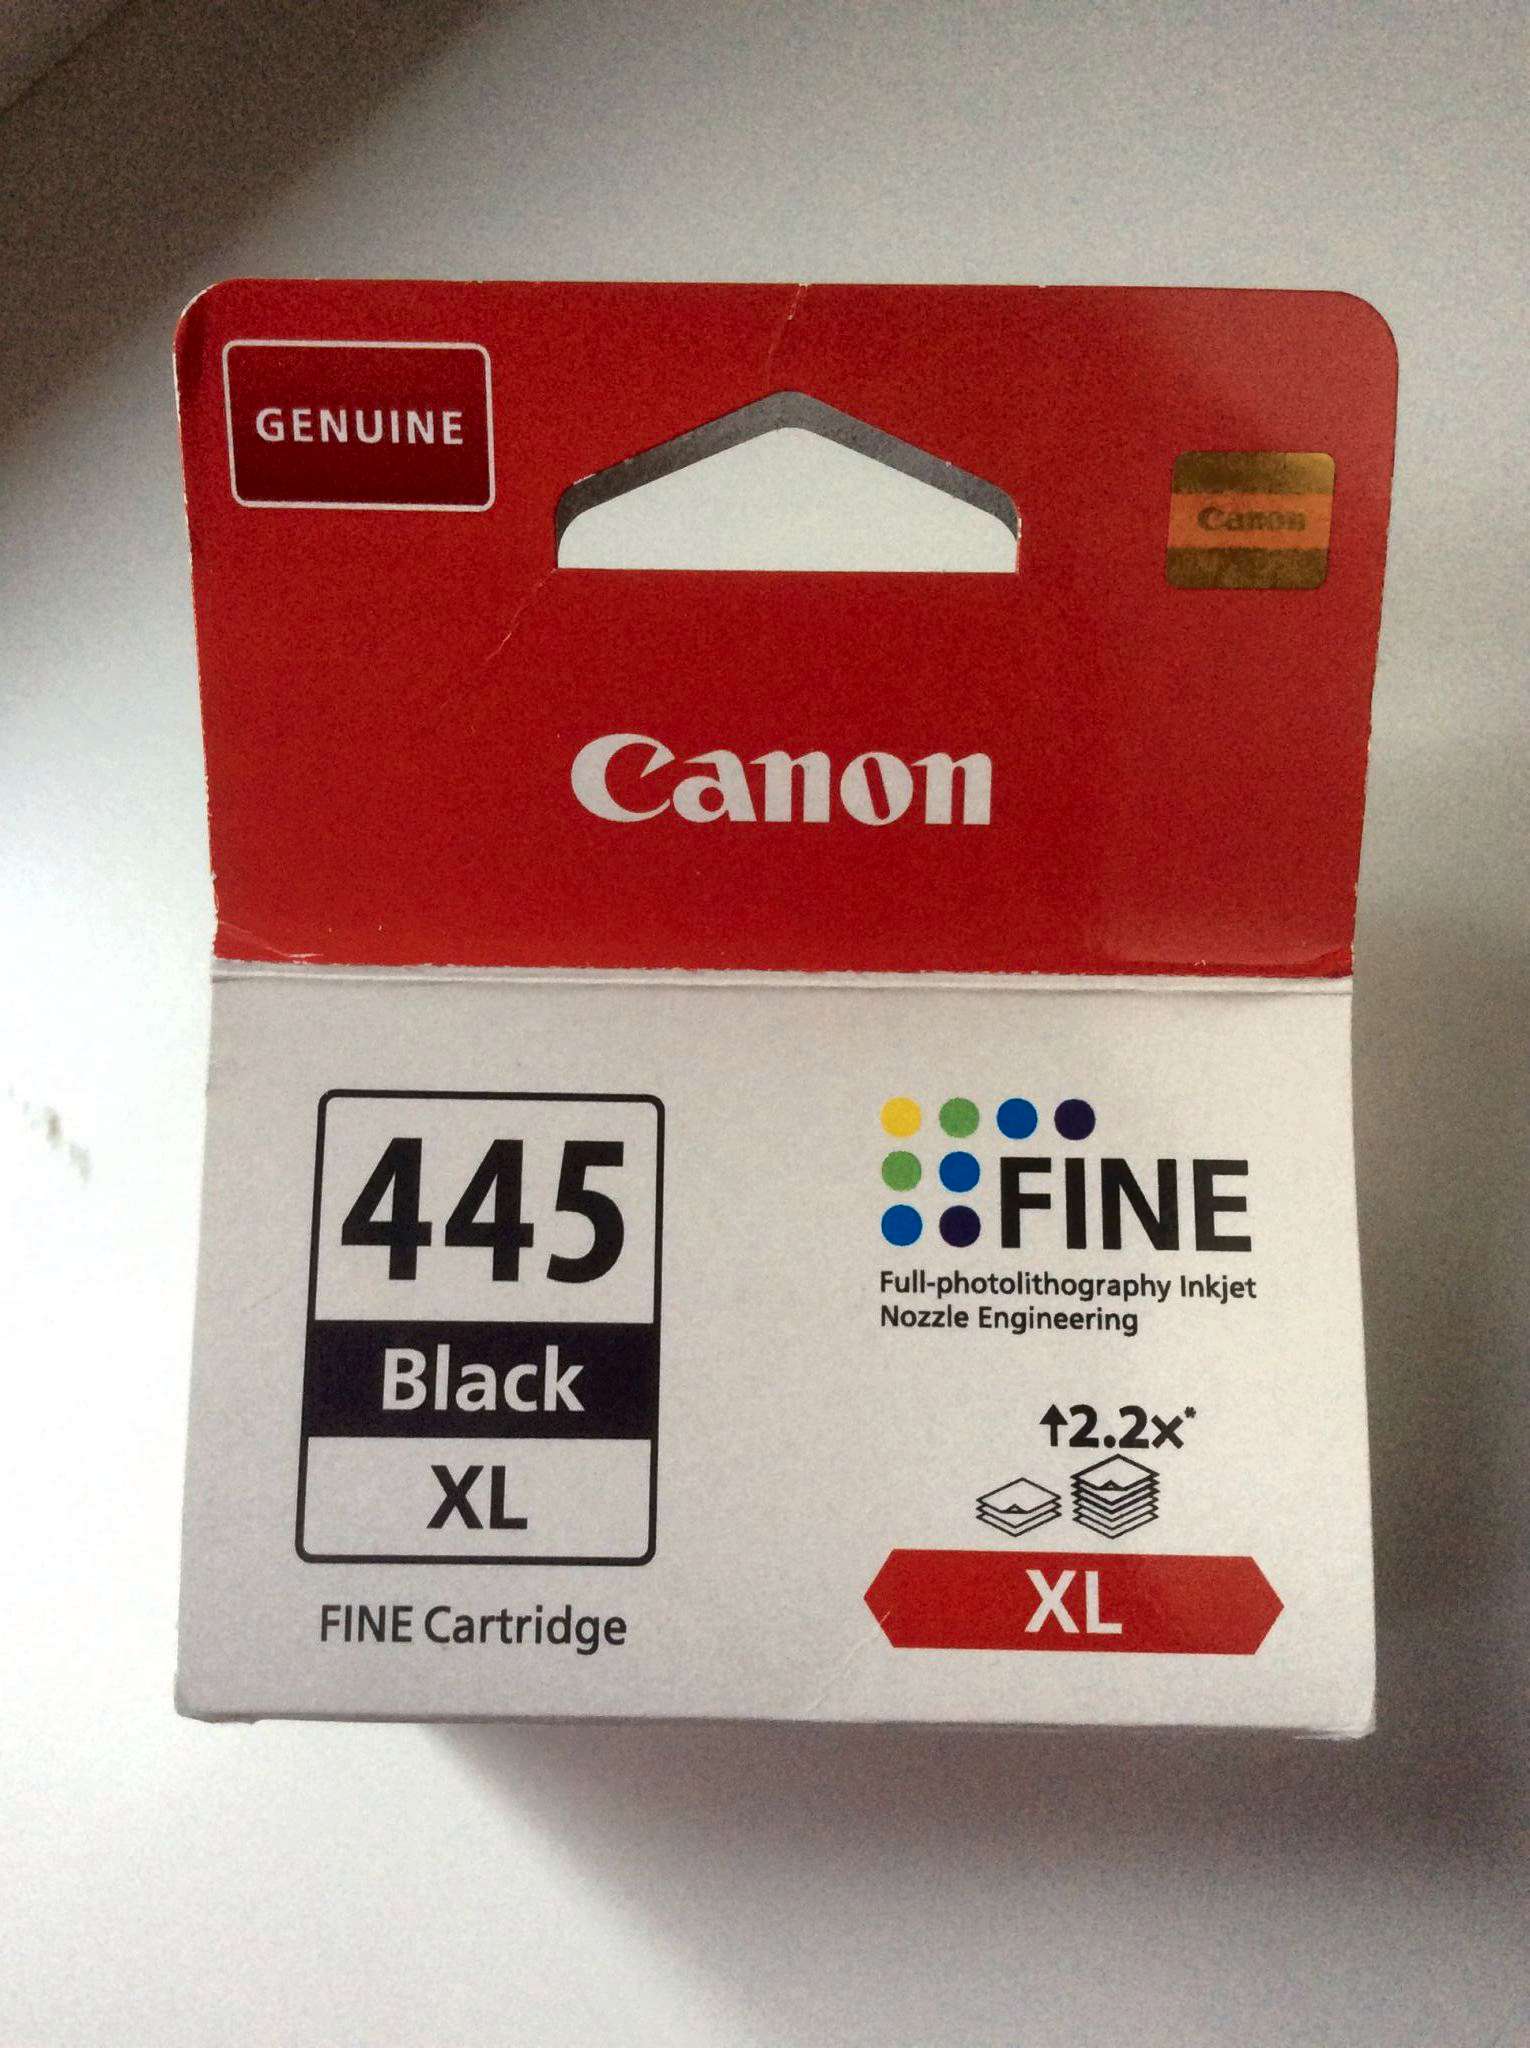 Canon pg 445 картридж для принтера купить. Картридж 445 XL Canon. Картридж для принтера Canon PG 445. Картридж Canon PG-445xl черный. Картридж струйный Canon PG-445 черный.